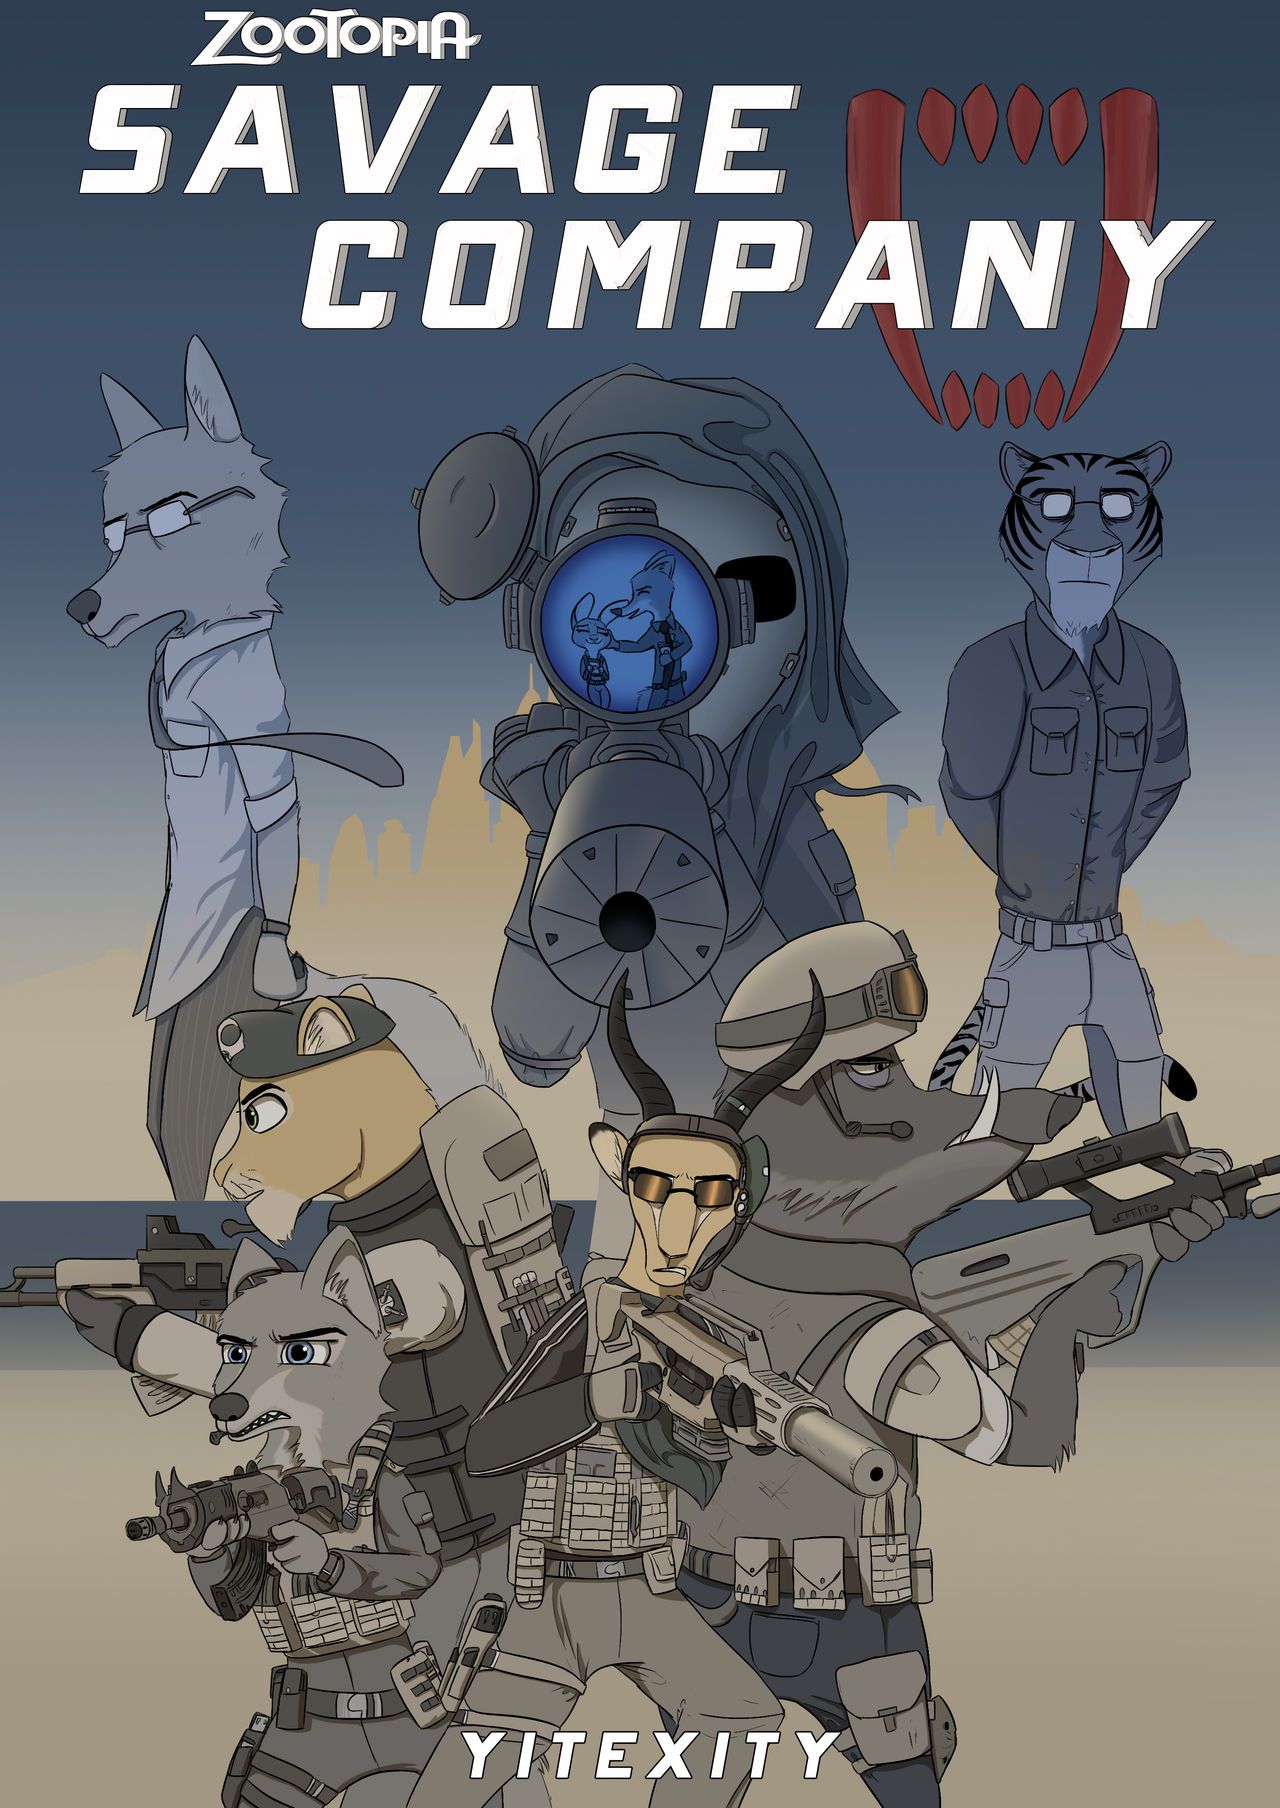 [Yitexity] Savage Company - Chapter 2 (Zootopia) [Ongoing] 1